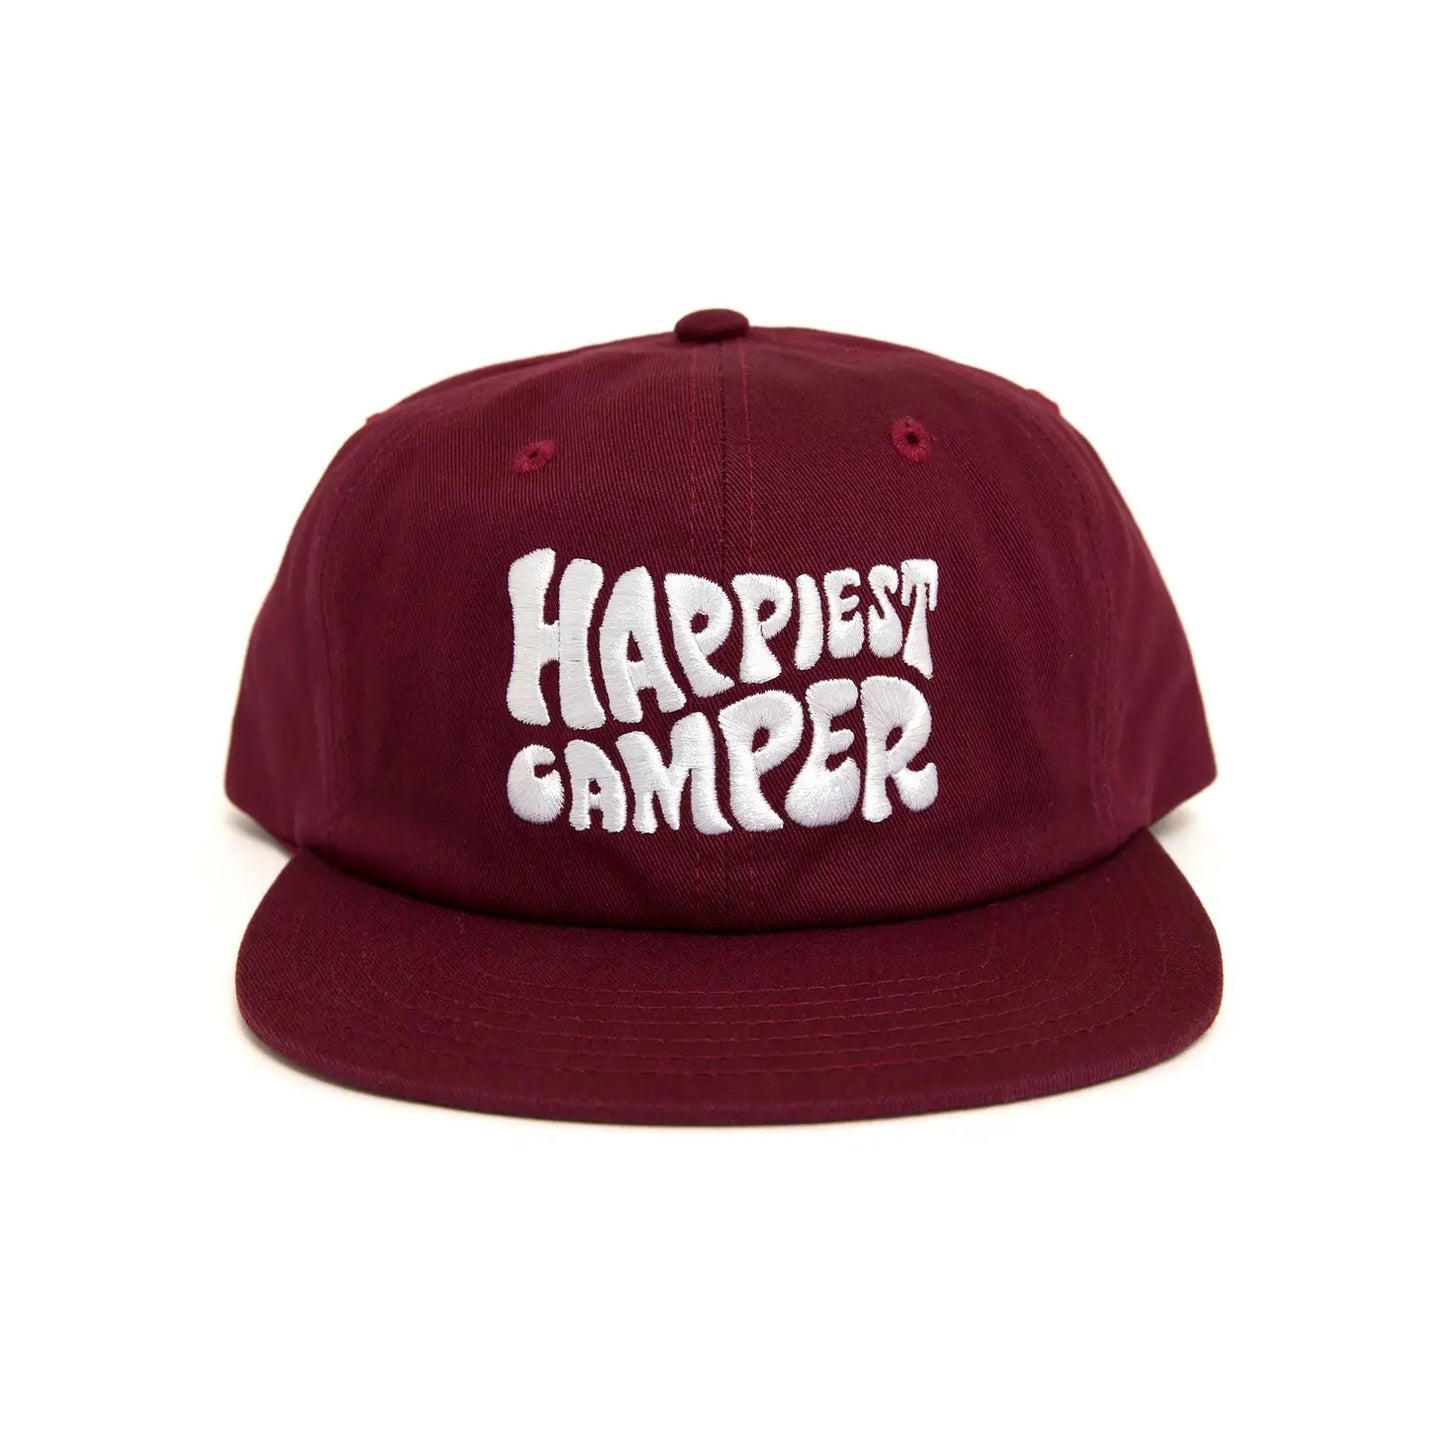 Happiest Camper Hat - Maroon